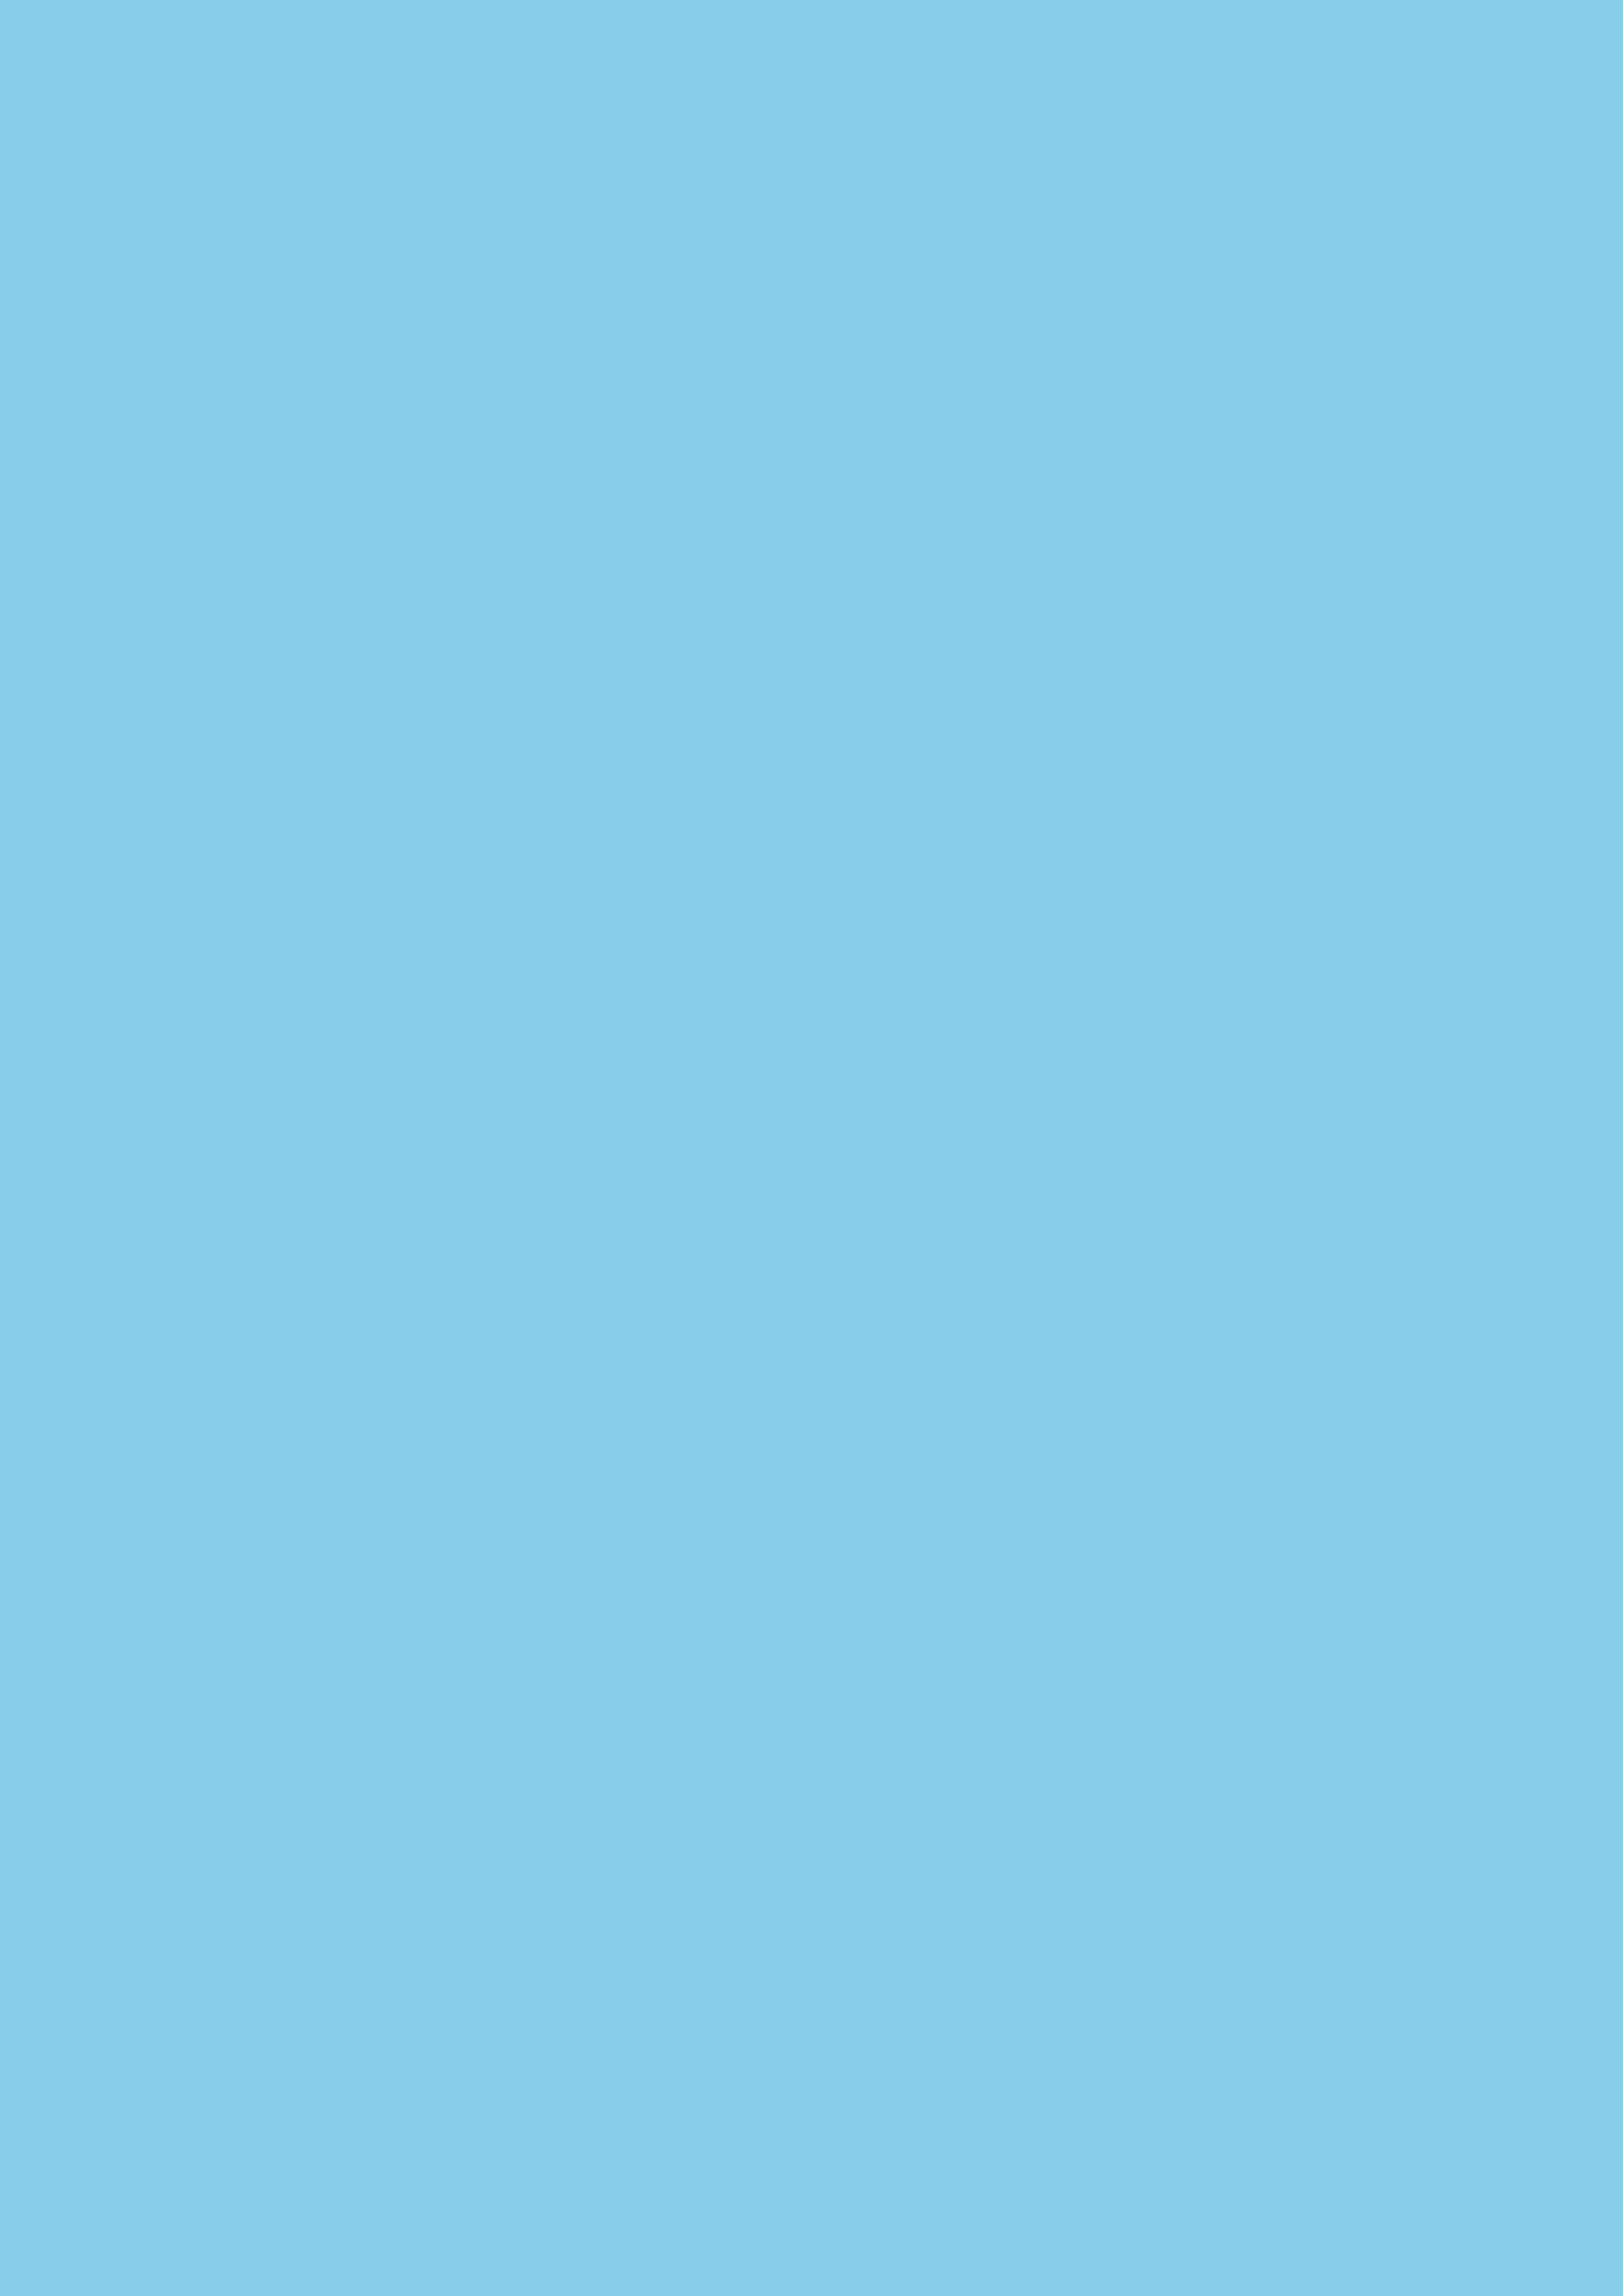 2480x3508 Sky Blue Solid Color Background